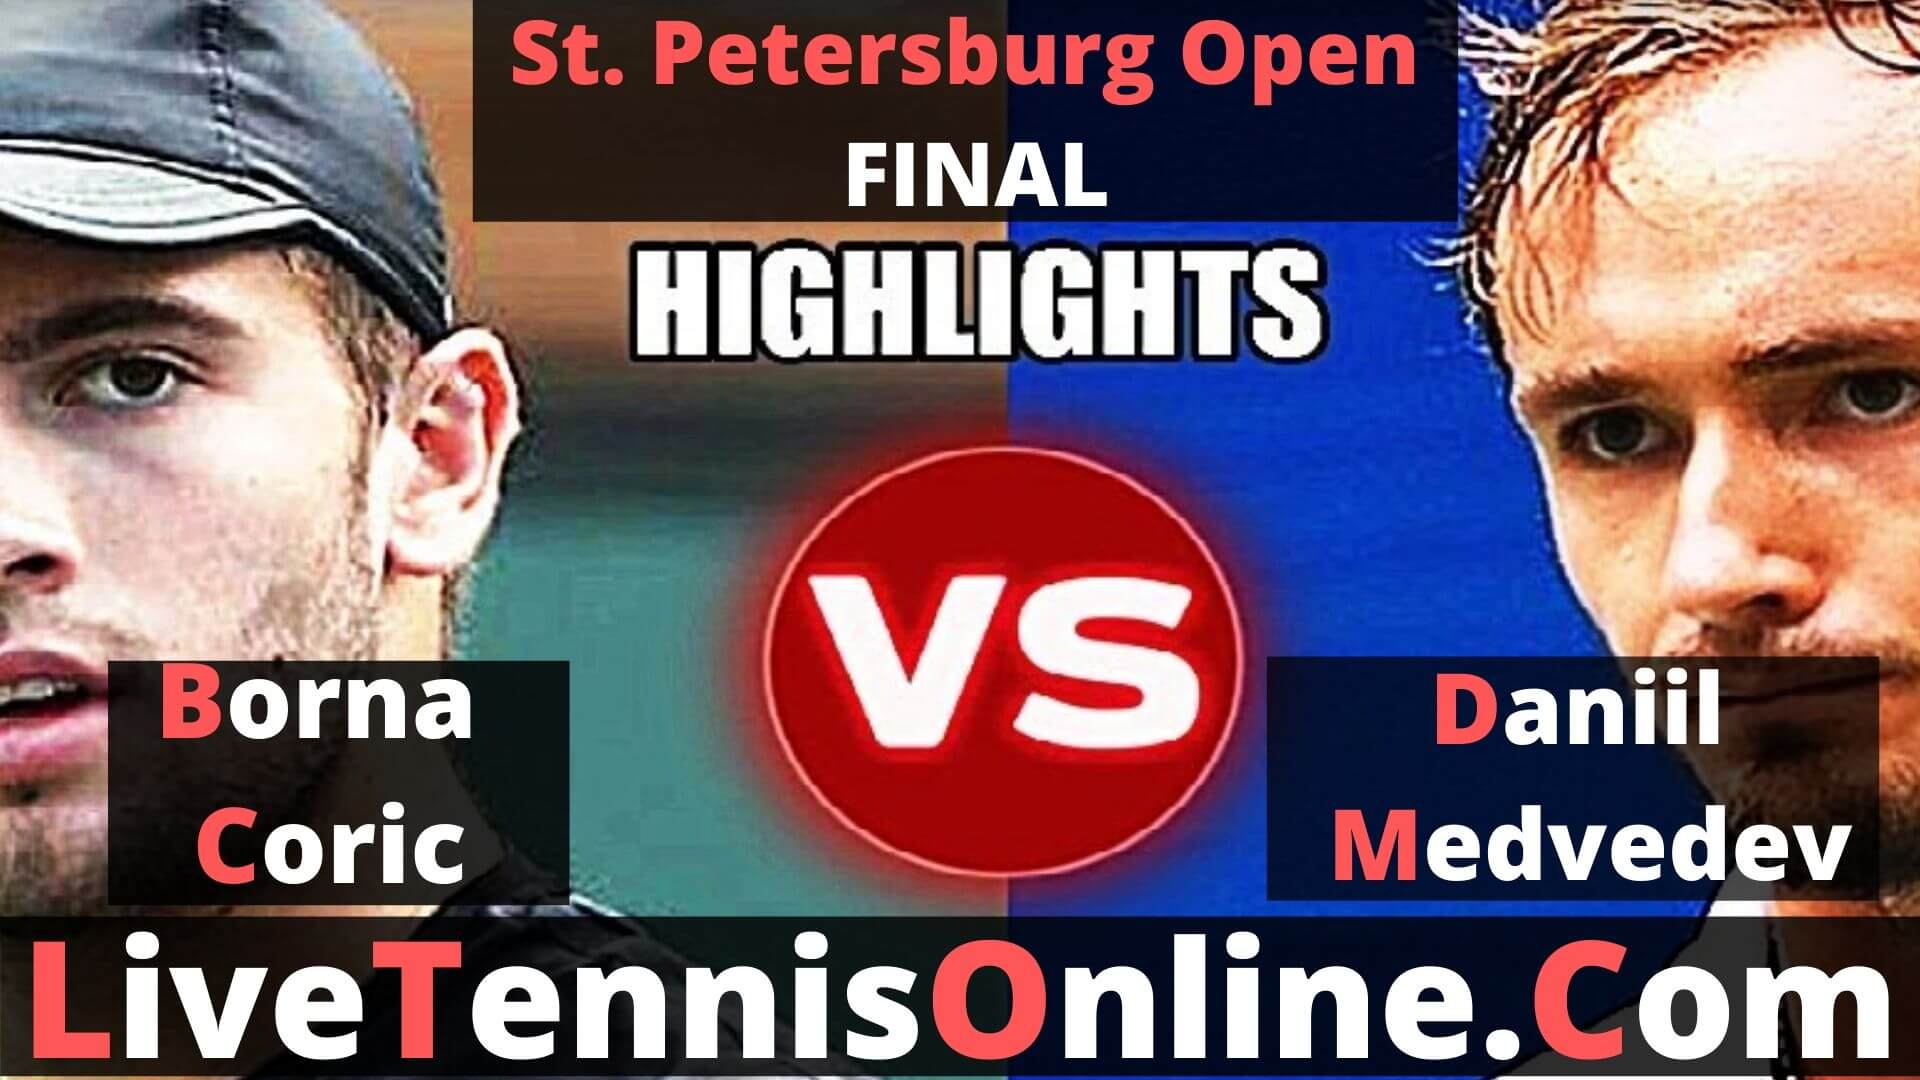 Daniil Medvedev  Vs Borna Coric Highlights 2019 St. Petersburg Open Final